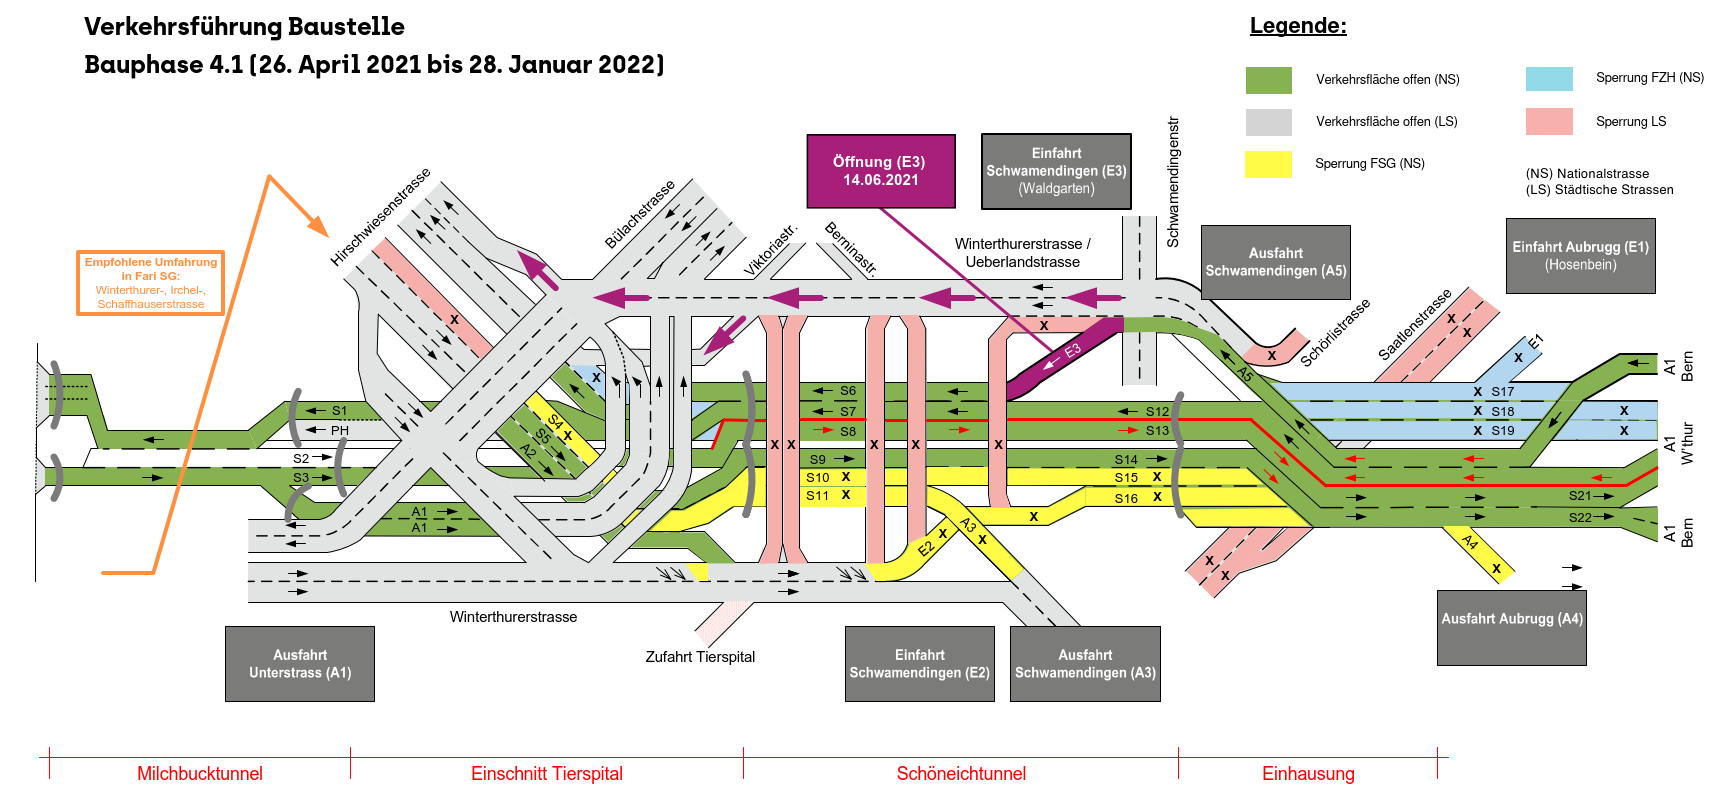 Verhehrsführung Bauphase 4.1 (26. April 2021 bis 28. Januar 2022)